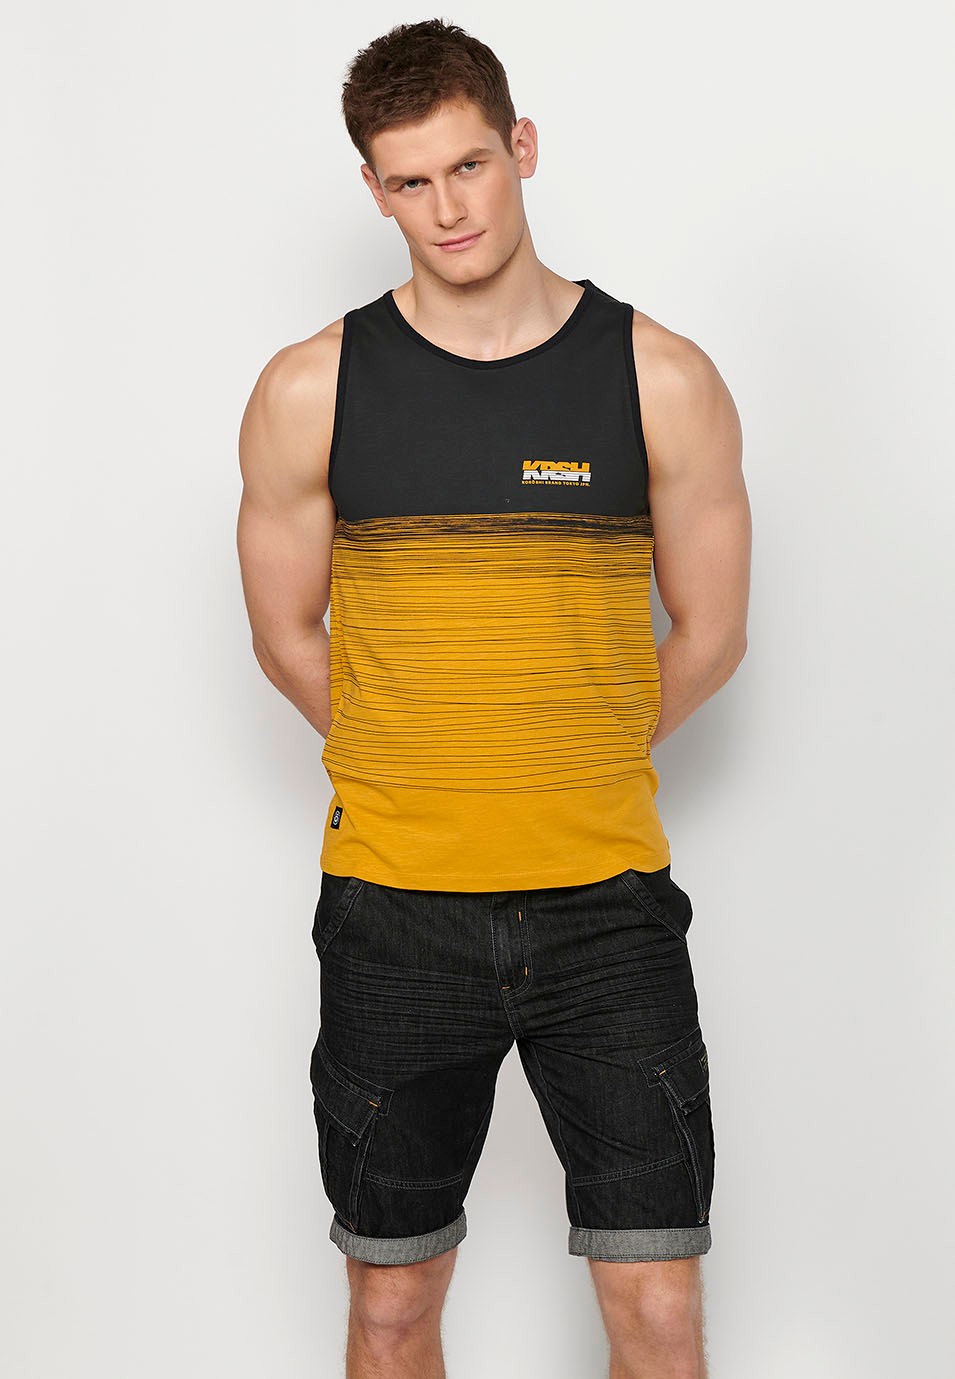 Camiseta de tirantes, estampado degradado amarillo, para hombres